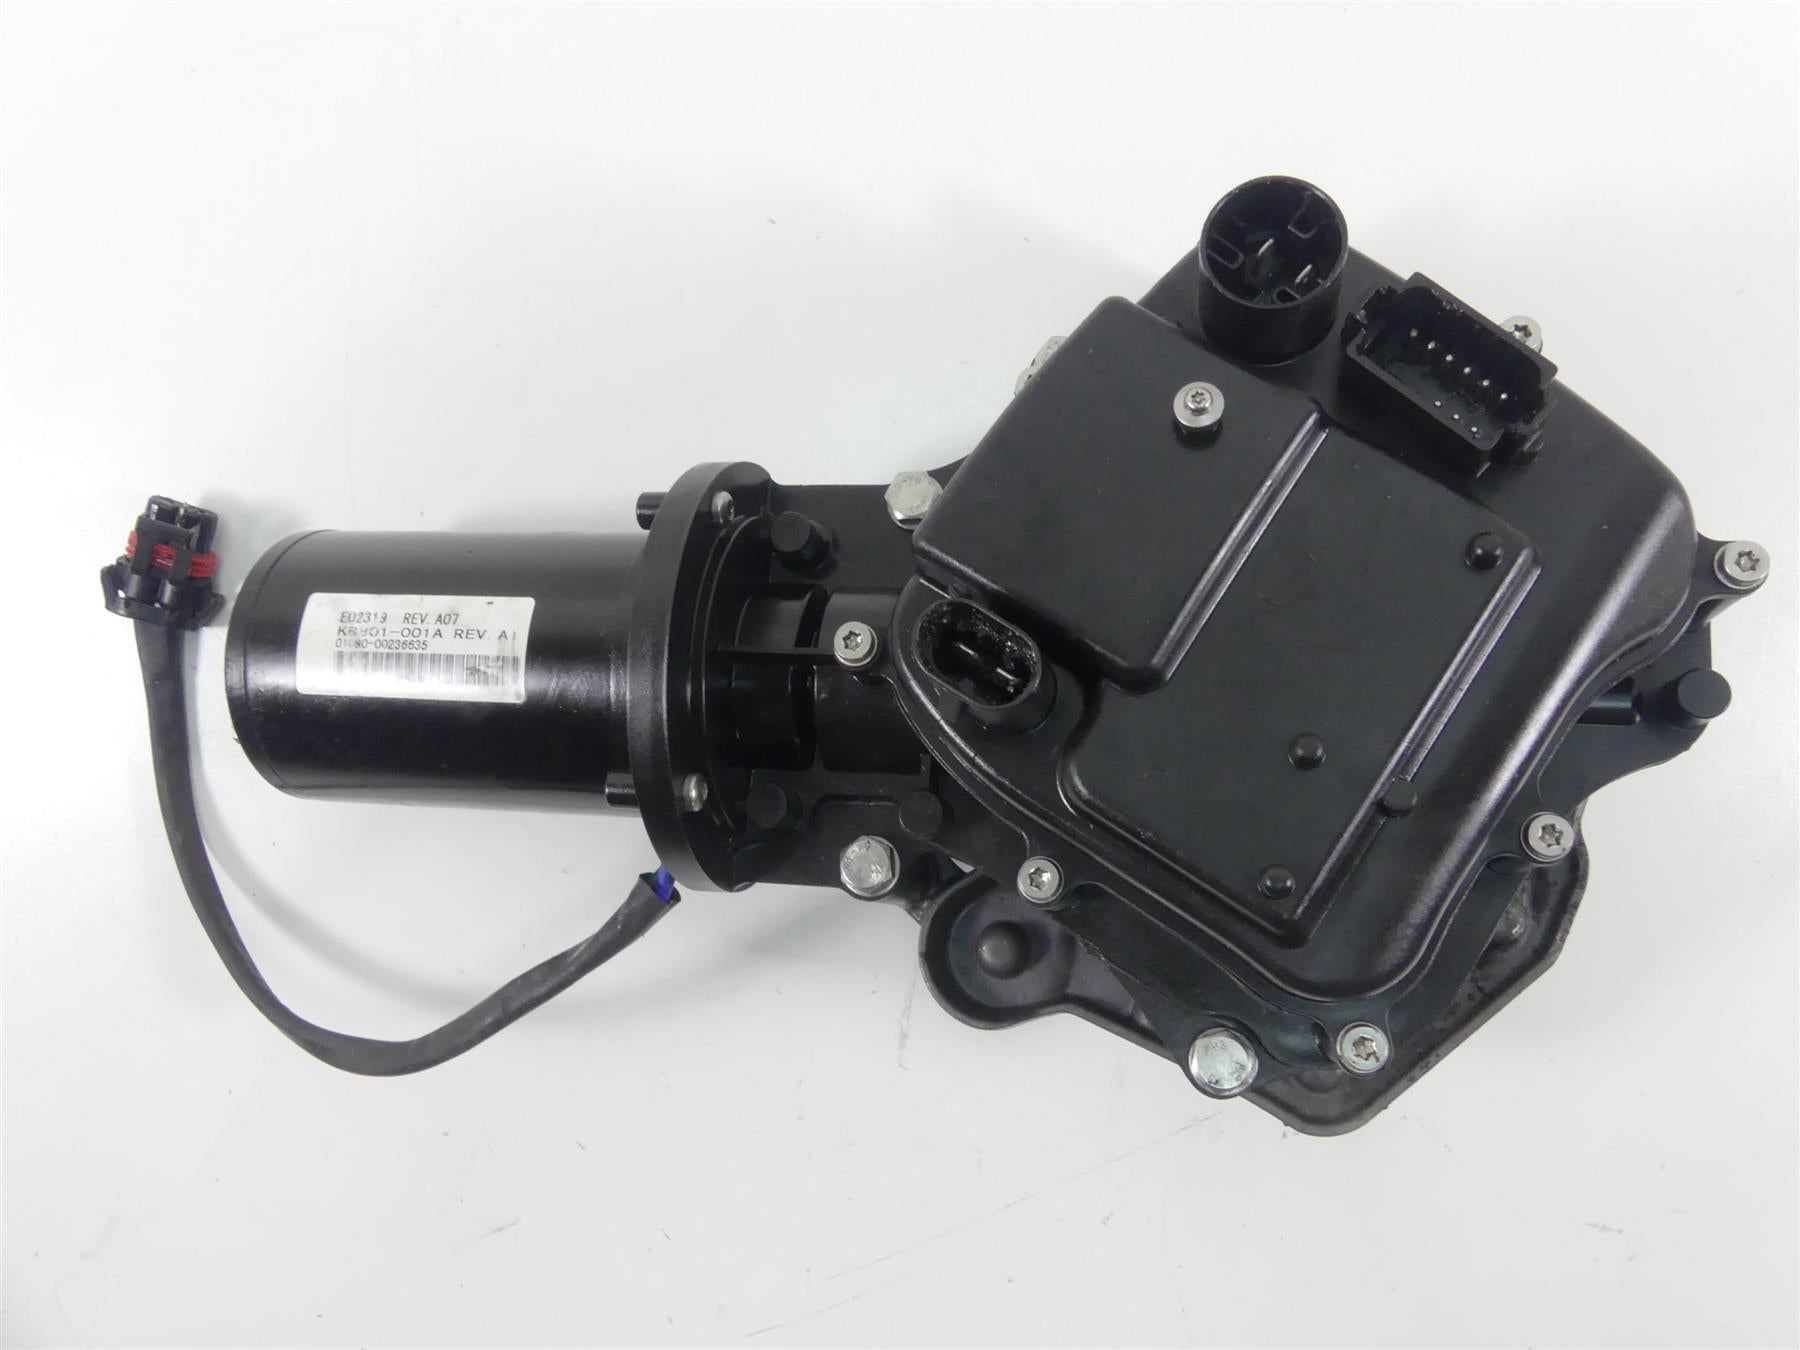 2013 Sea-Doo 4-Tec GTR 215 Ibr Actuator Control Motor Unit -Freshwater  278003040